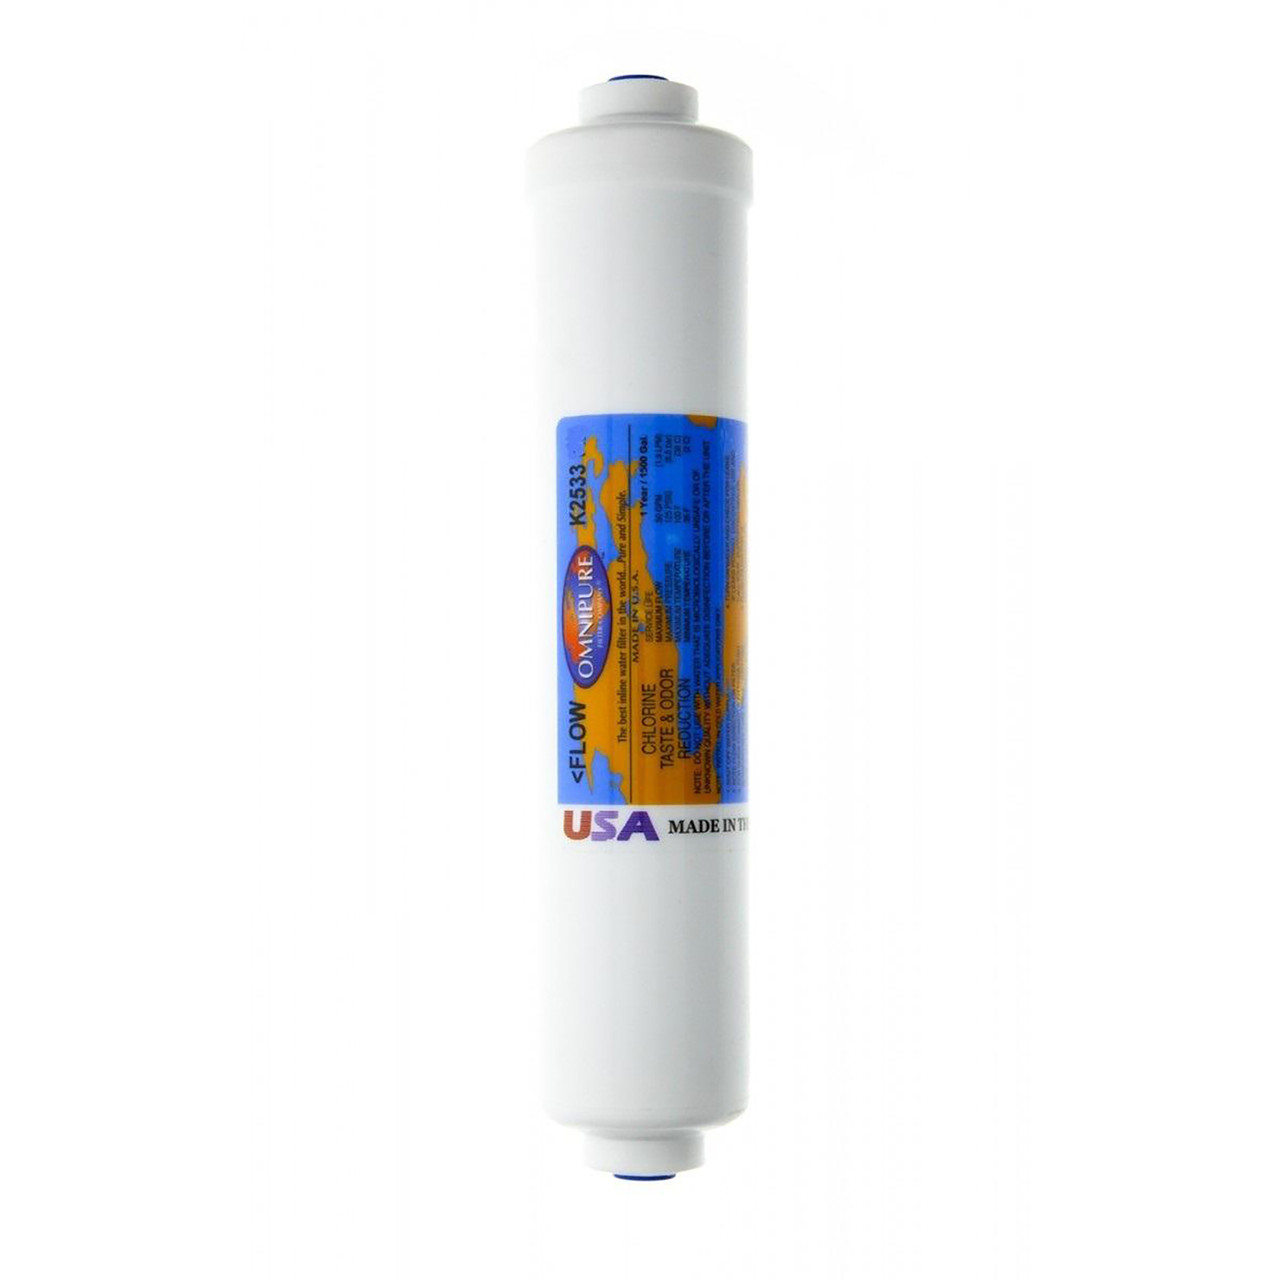 2 x Omnipure Water Filter K2533 